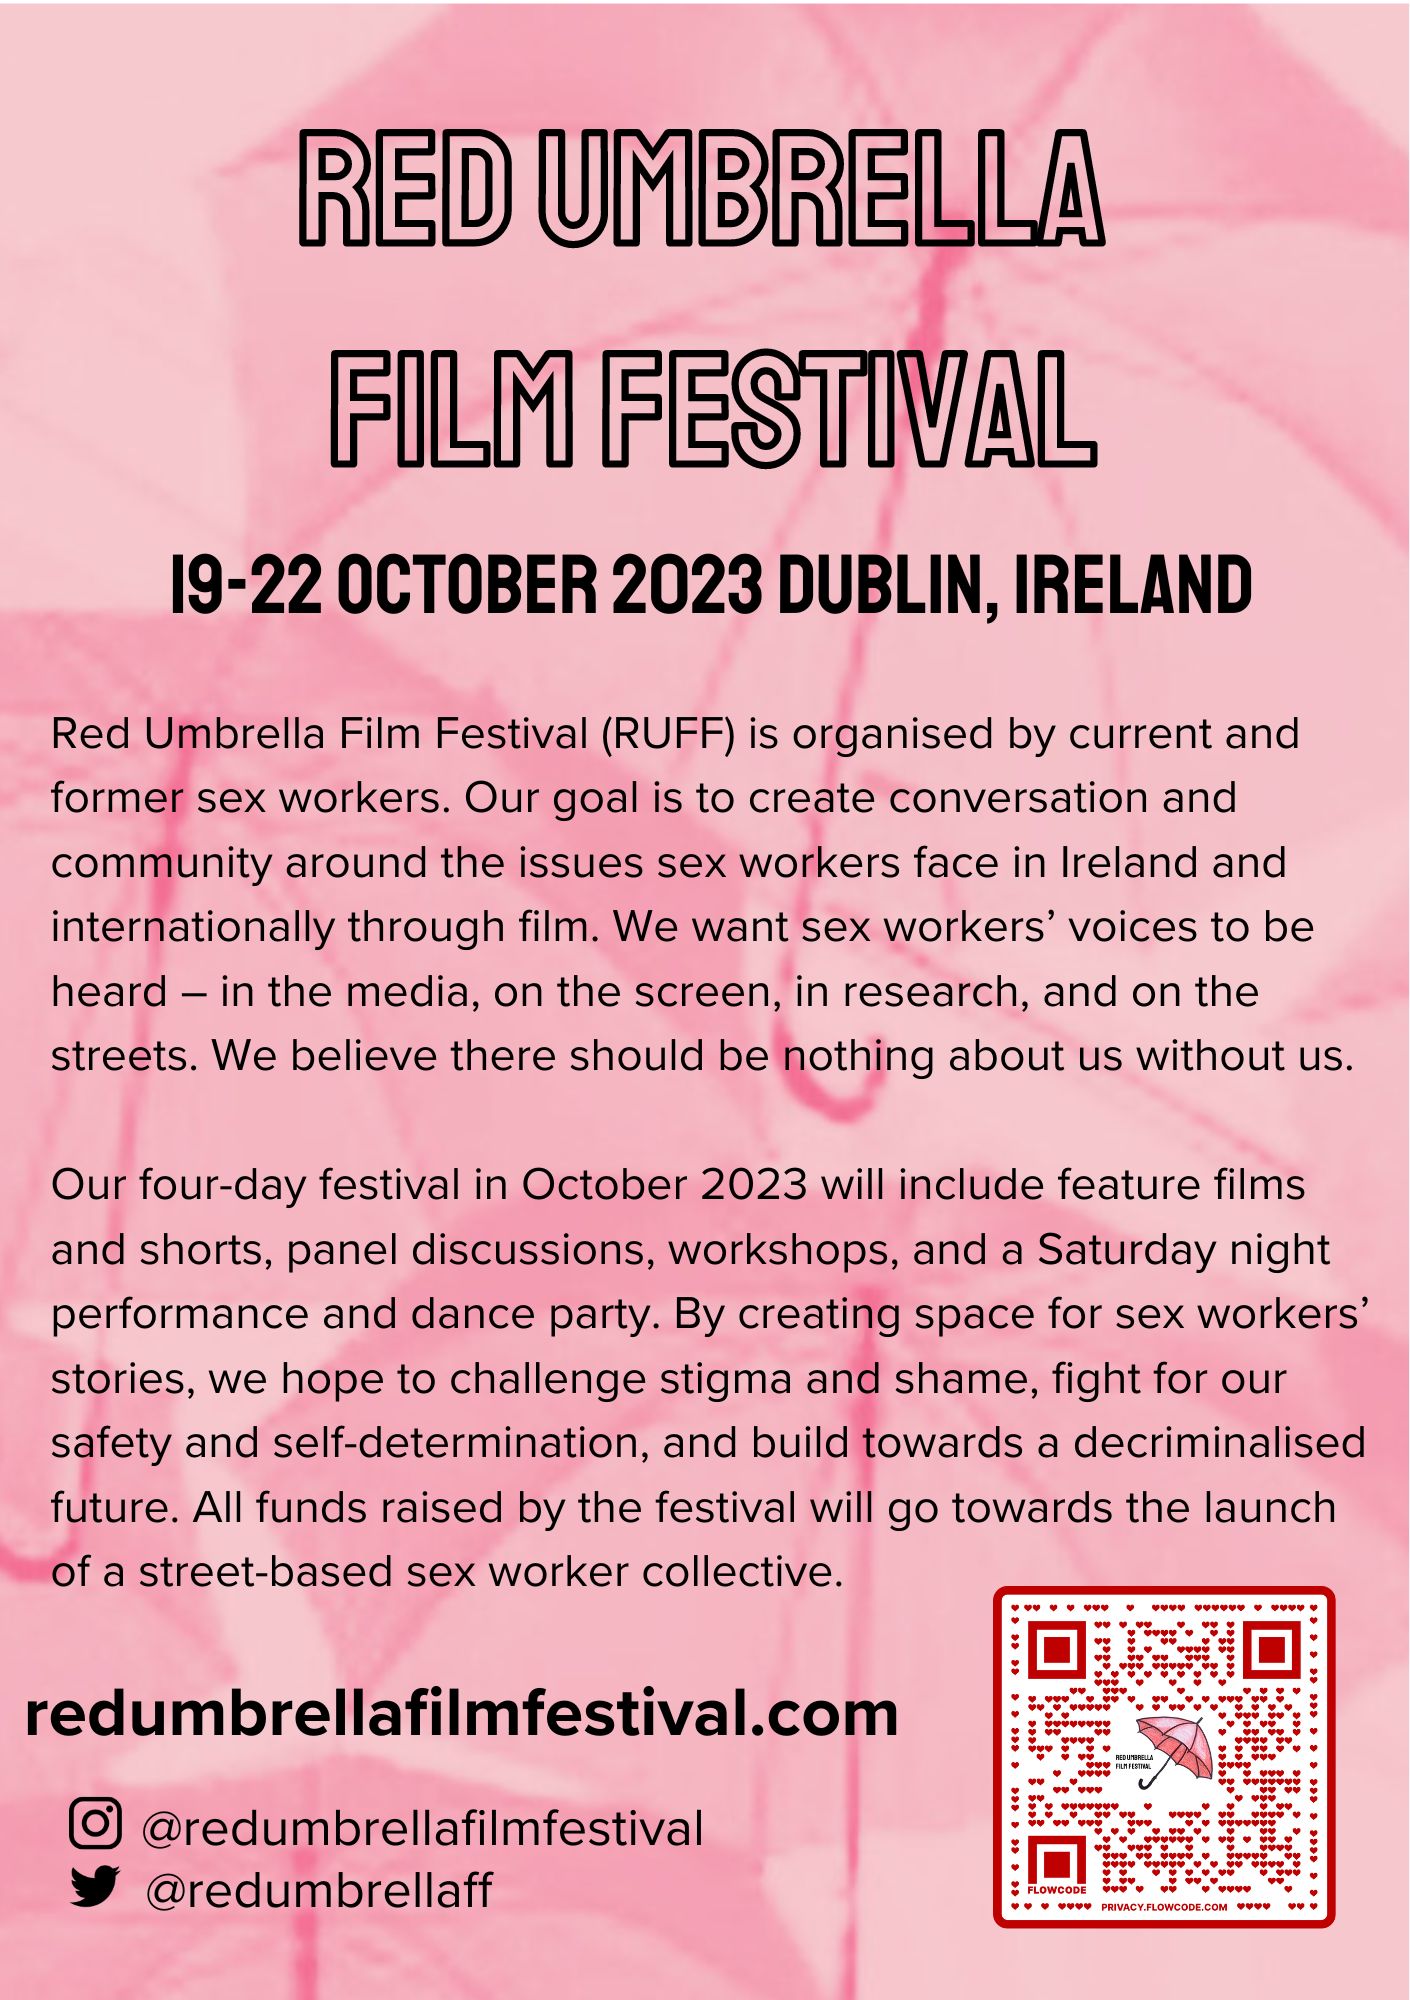 Red Umbrella Film Festival 19-22 October